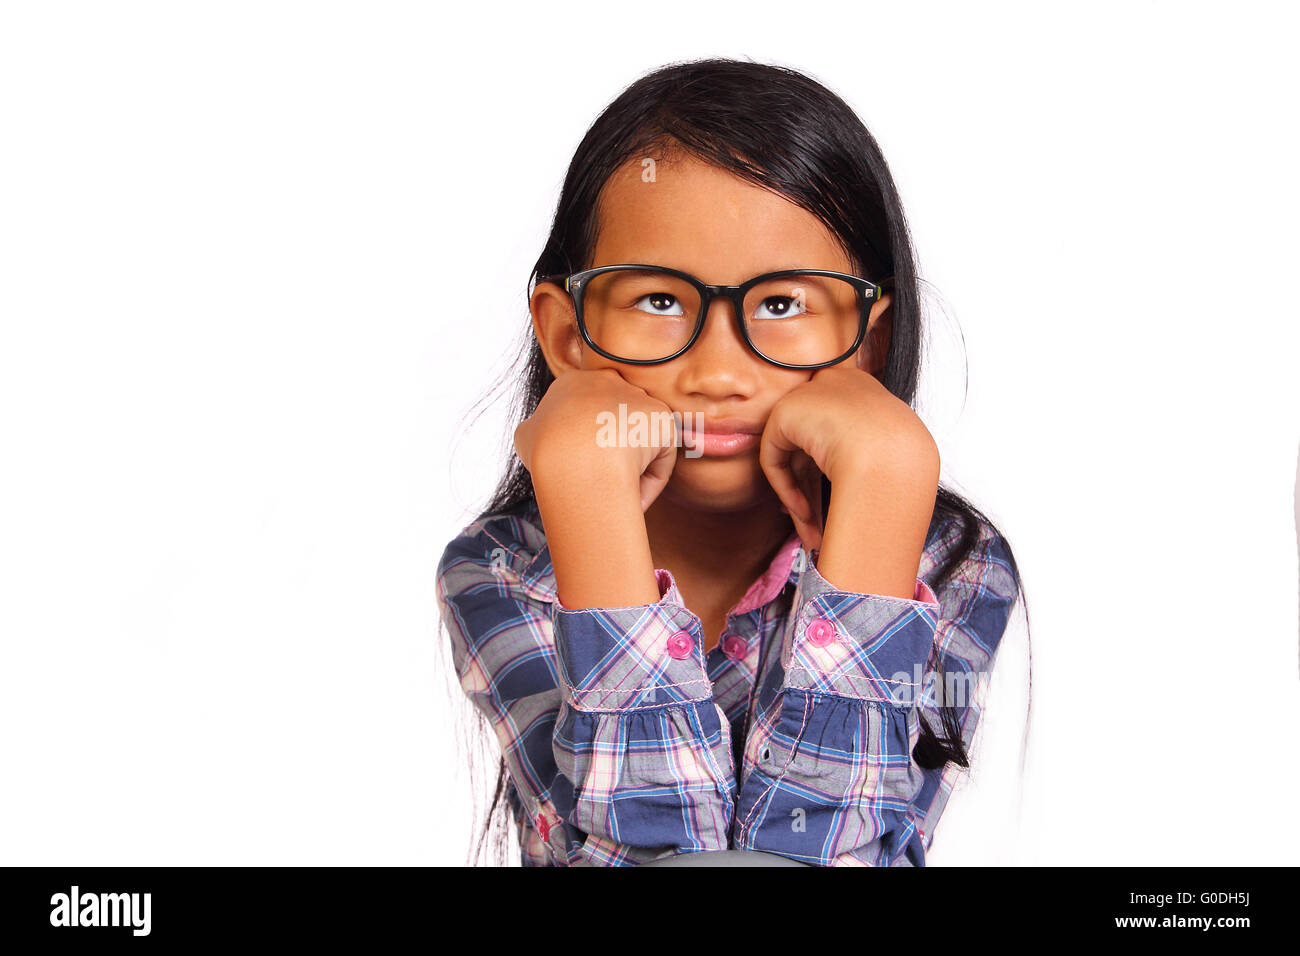 Niña con gafas mostrando aburrido gesto aislado en blanco Foto de stock